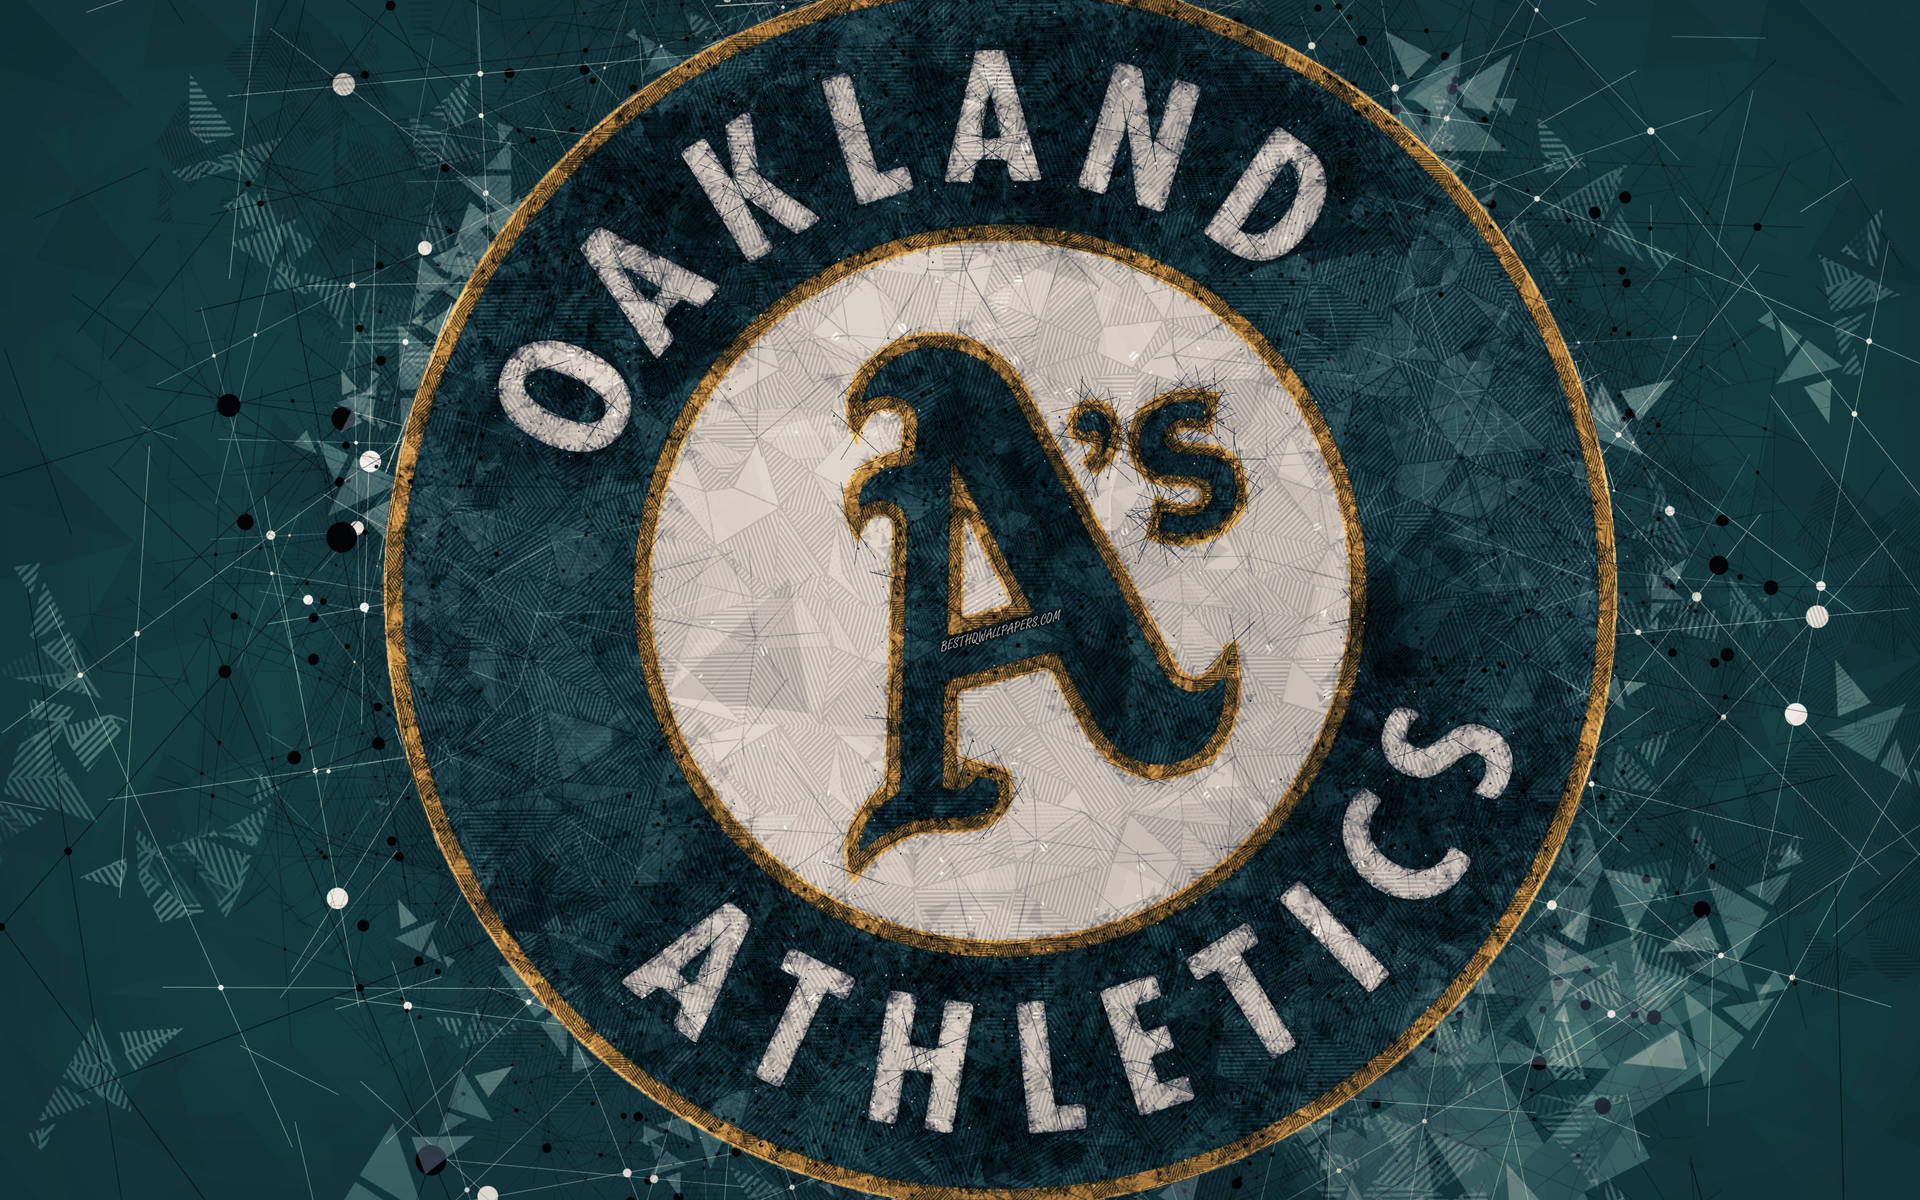 Oakland Athletics Wallpapers